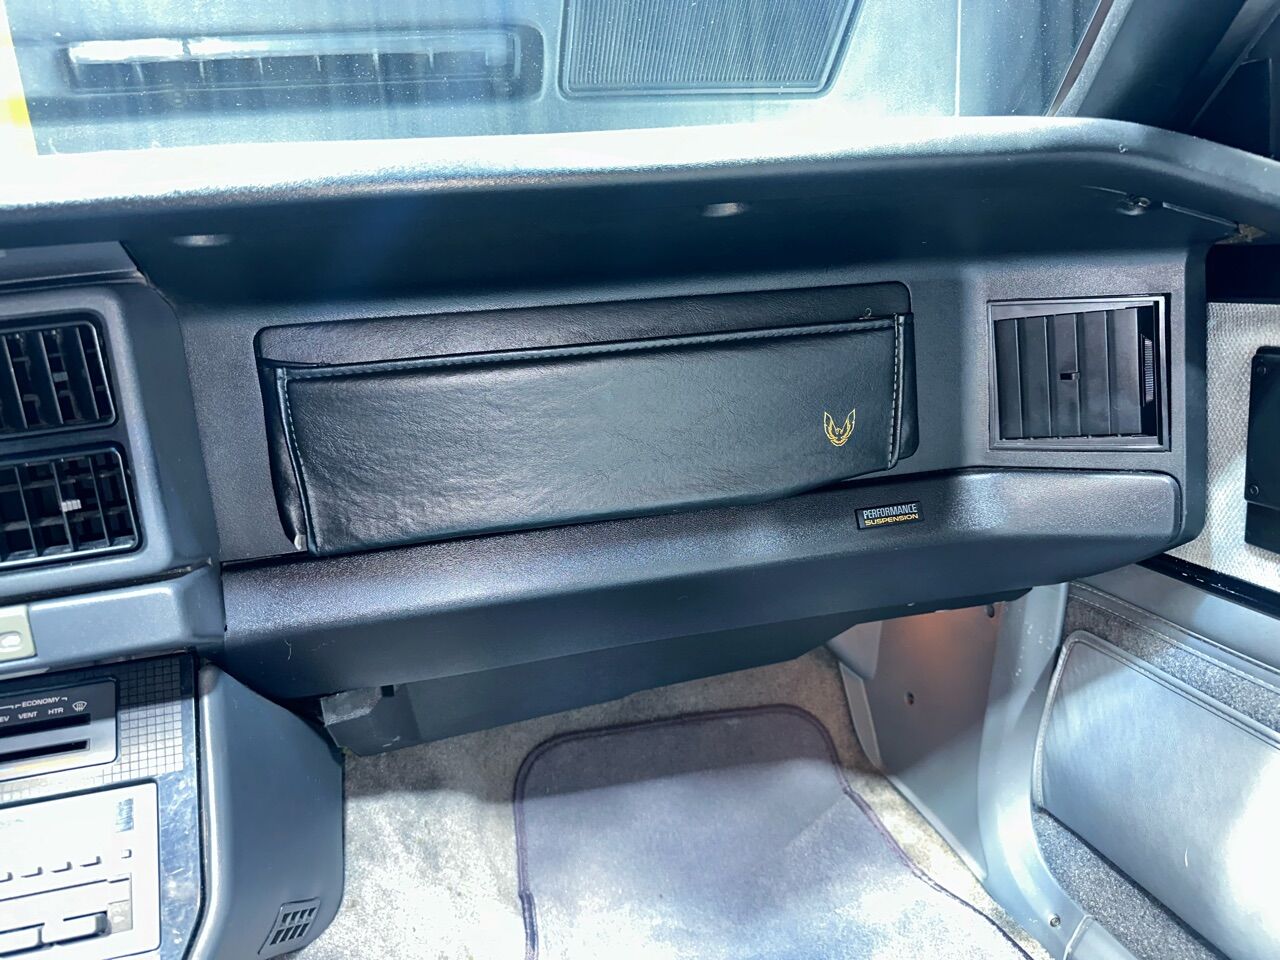 1989 Pontiac Firebird 38